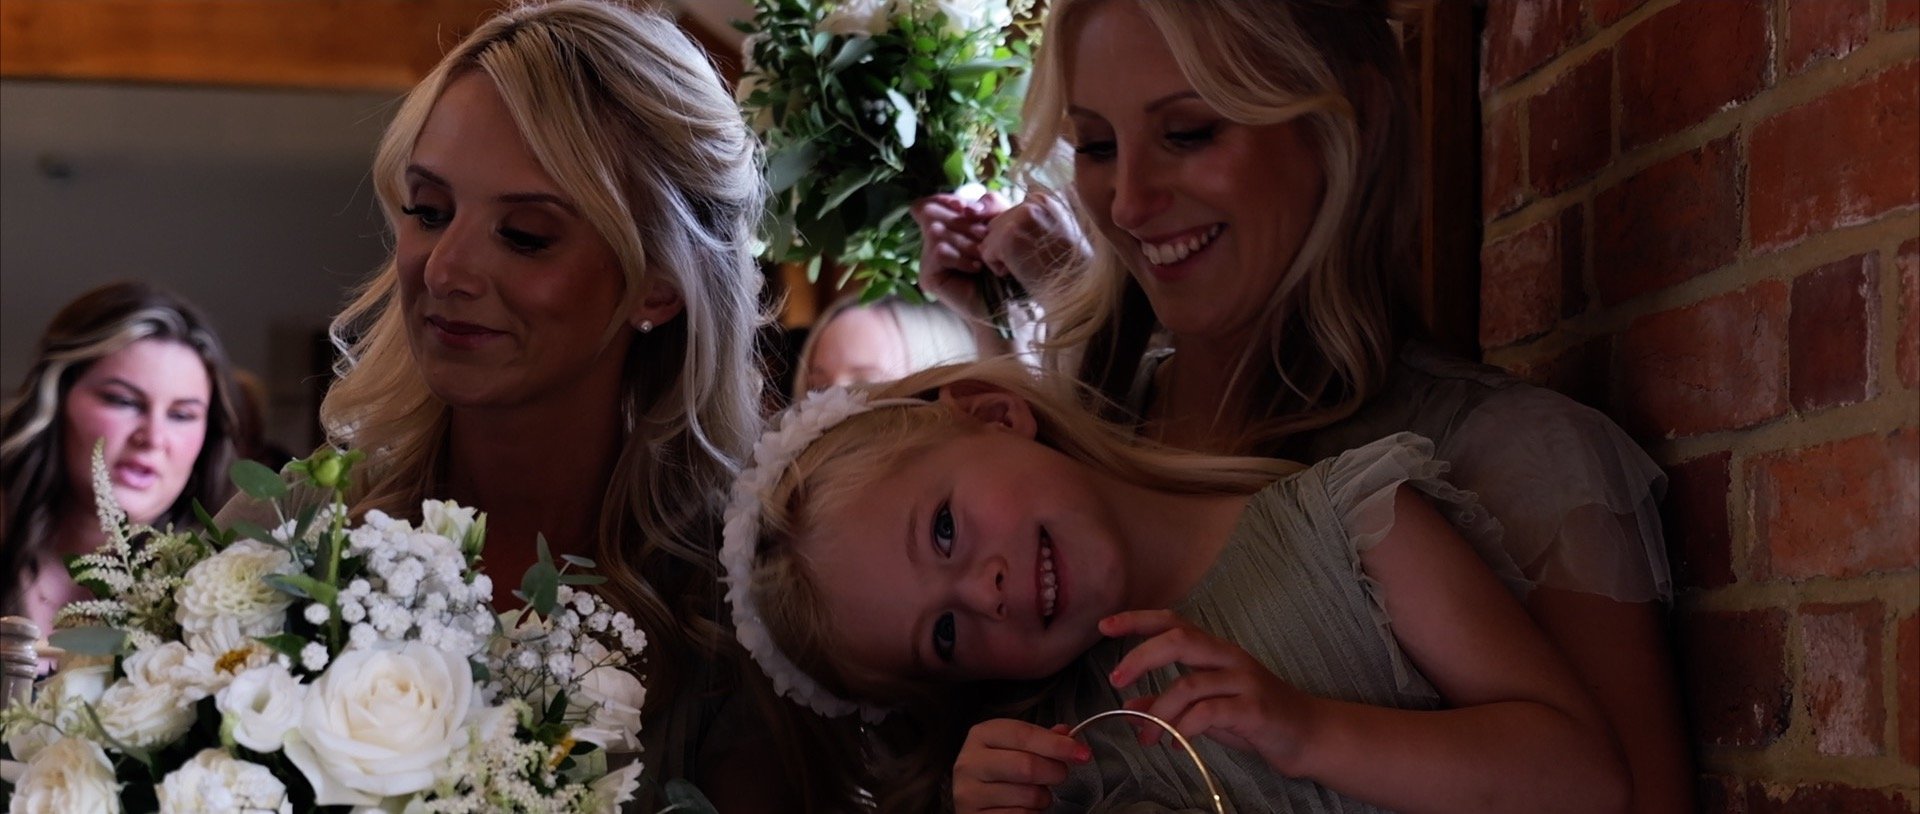 3 Cheers Media - Apton Hall Wedding Video - Happy bridesmaids.jpg